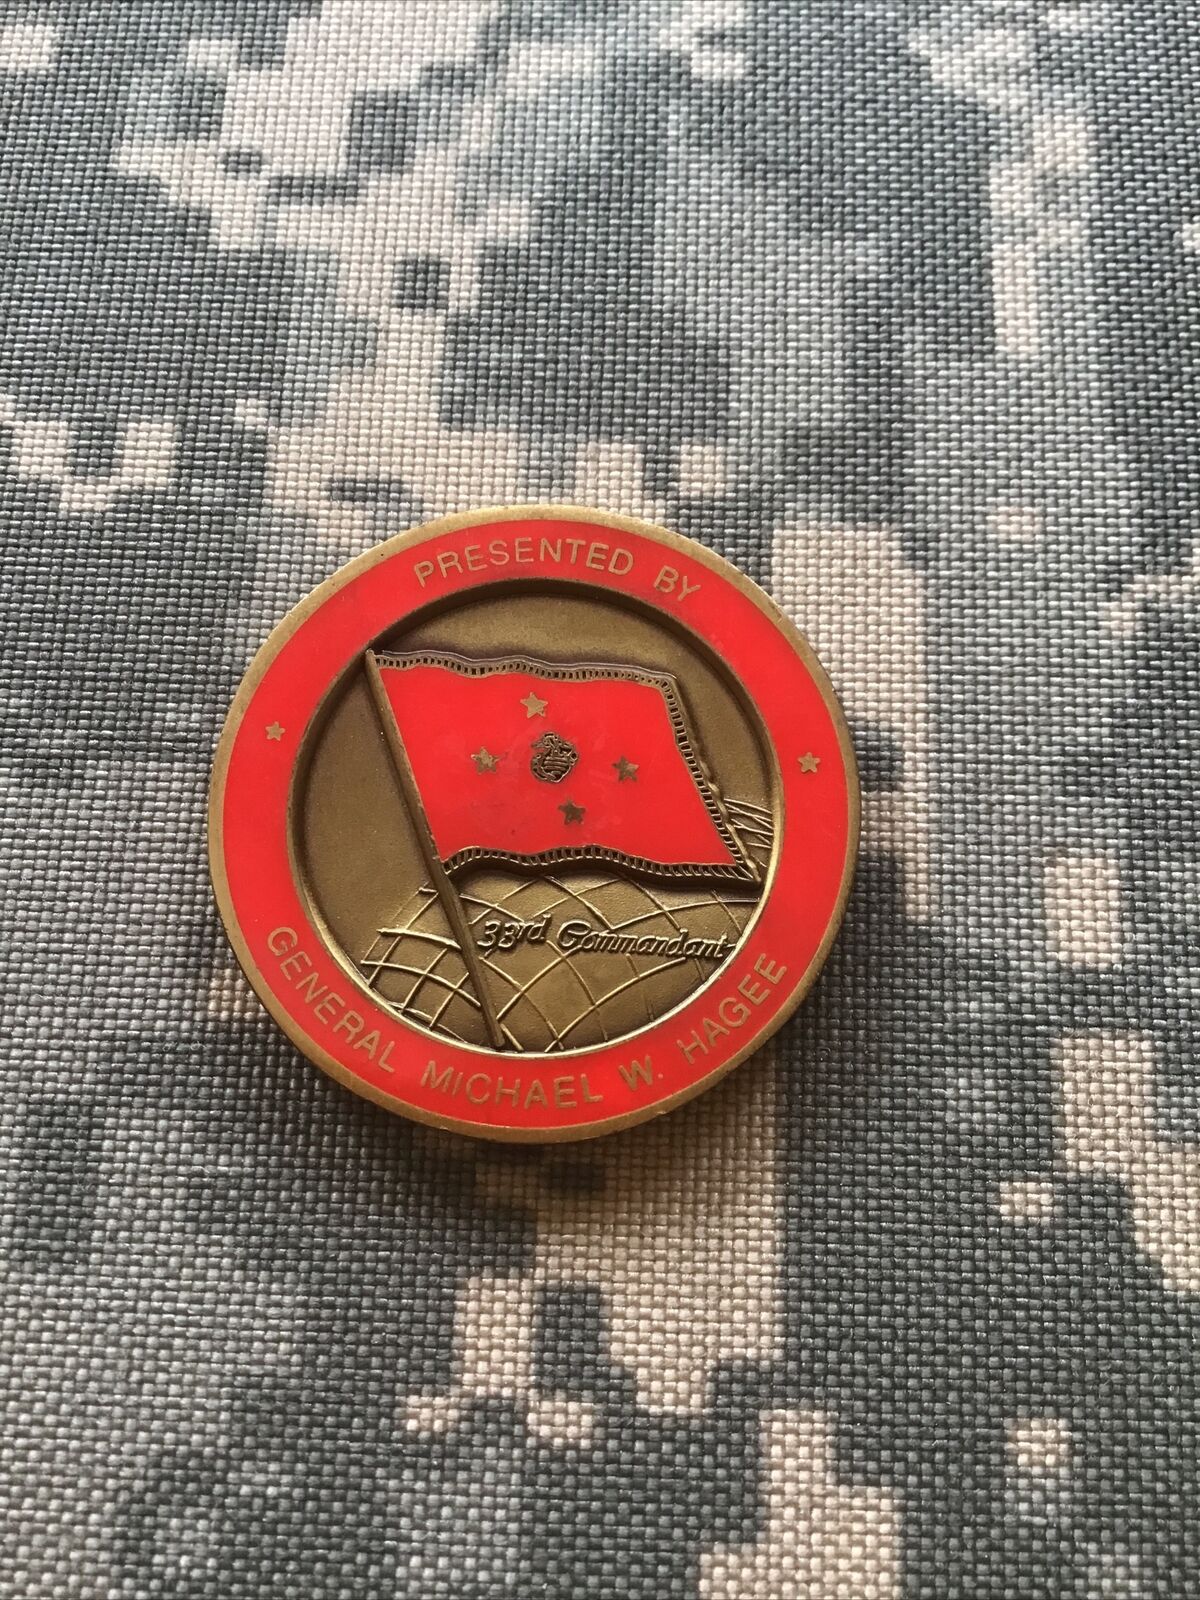 RARE General Michael W. Hagee USMC 33rd Commandant Presented Challenge Coin 1-1